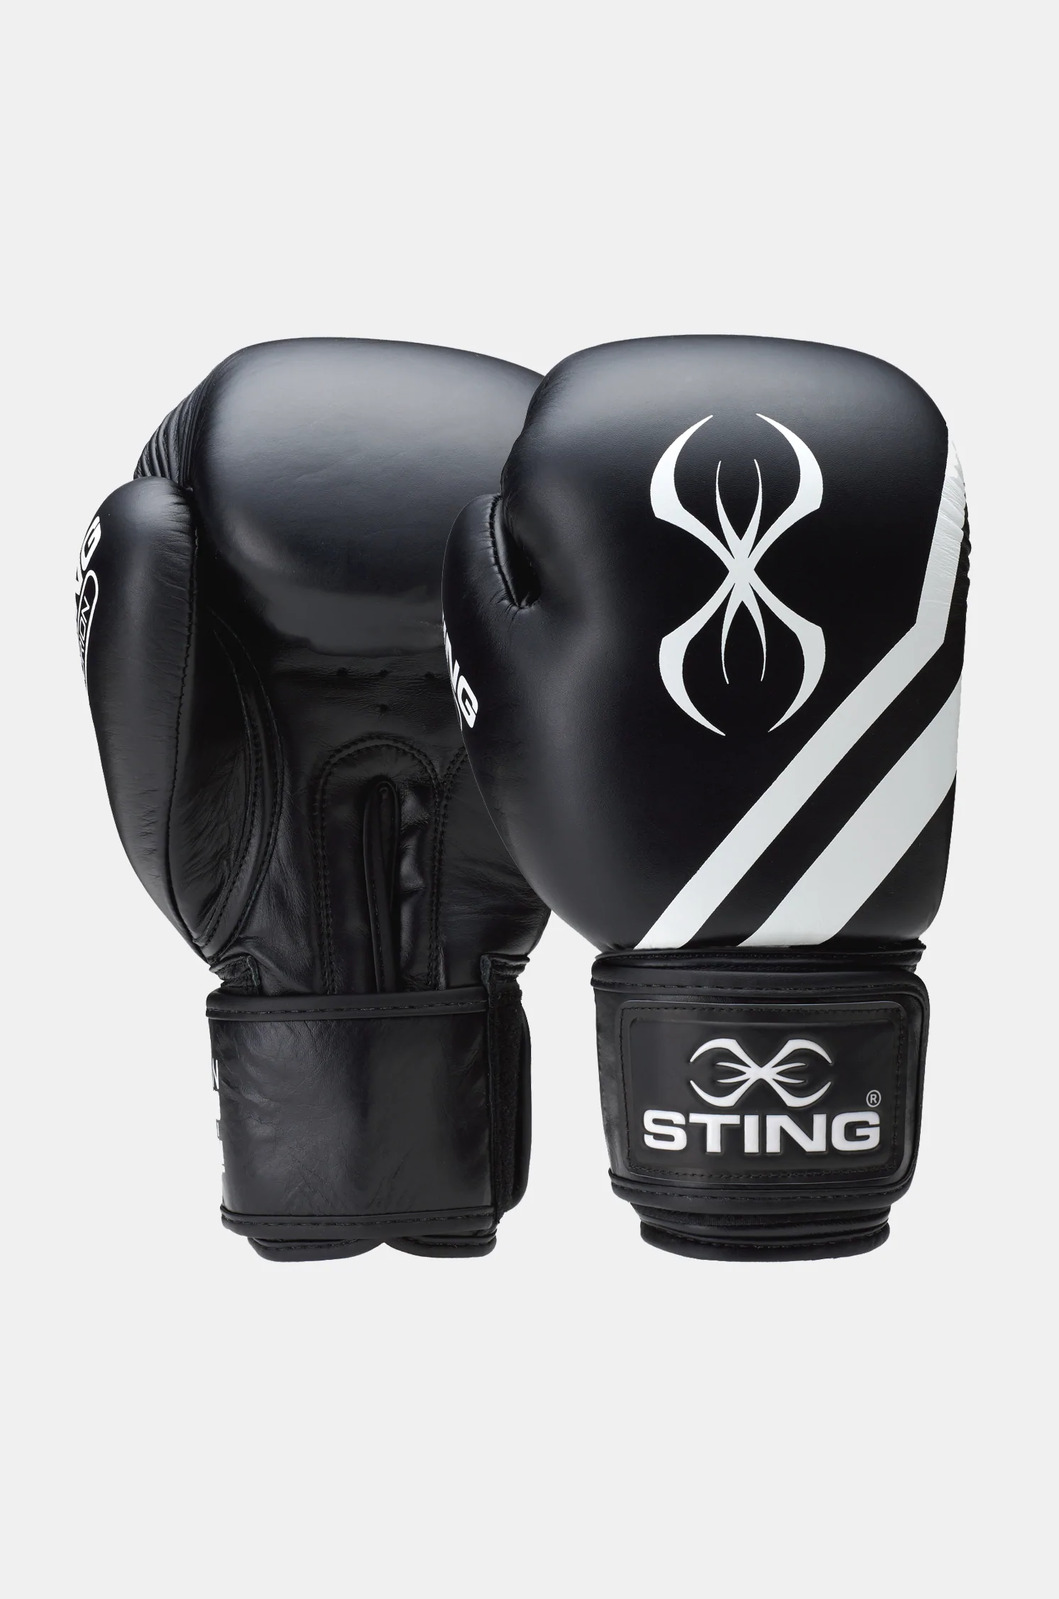 STING - Orion Training Glove - Black/White - 12oz